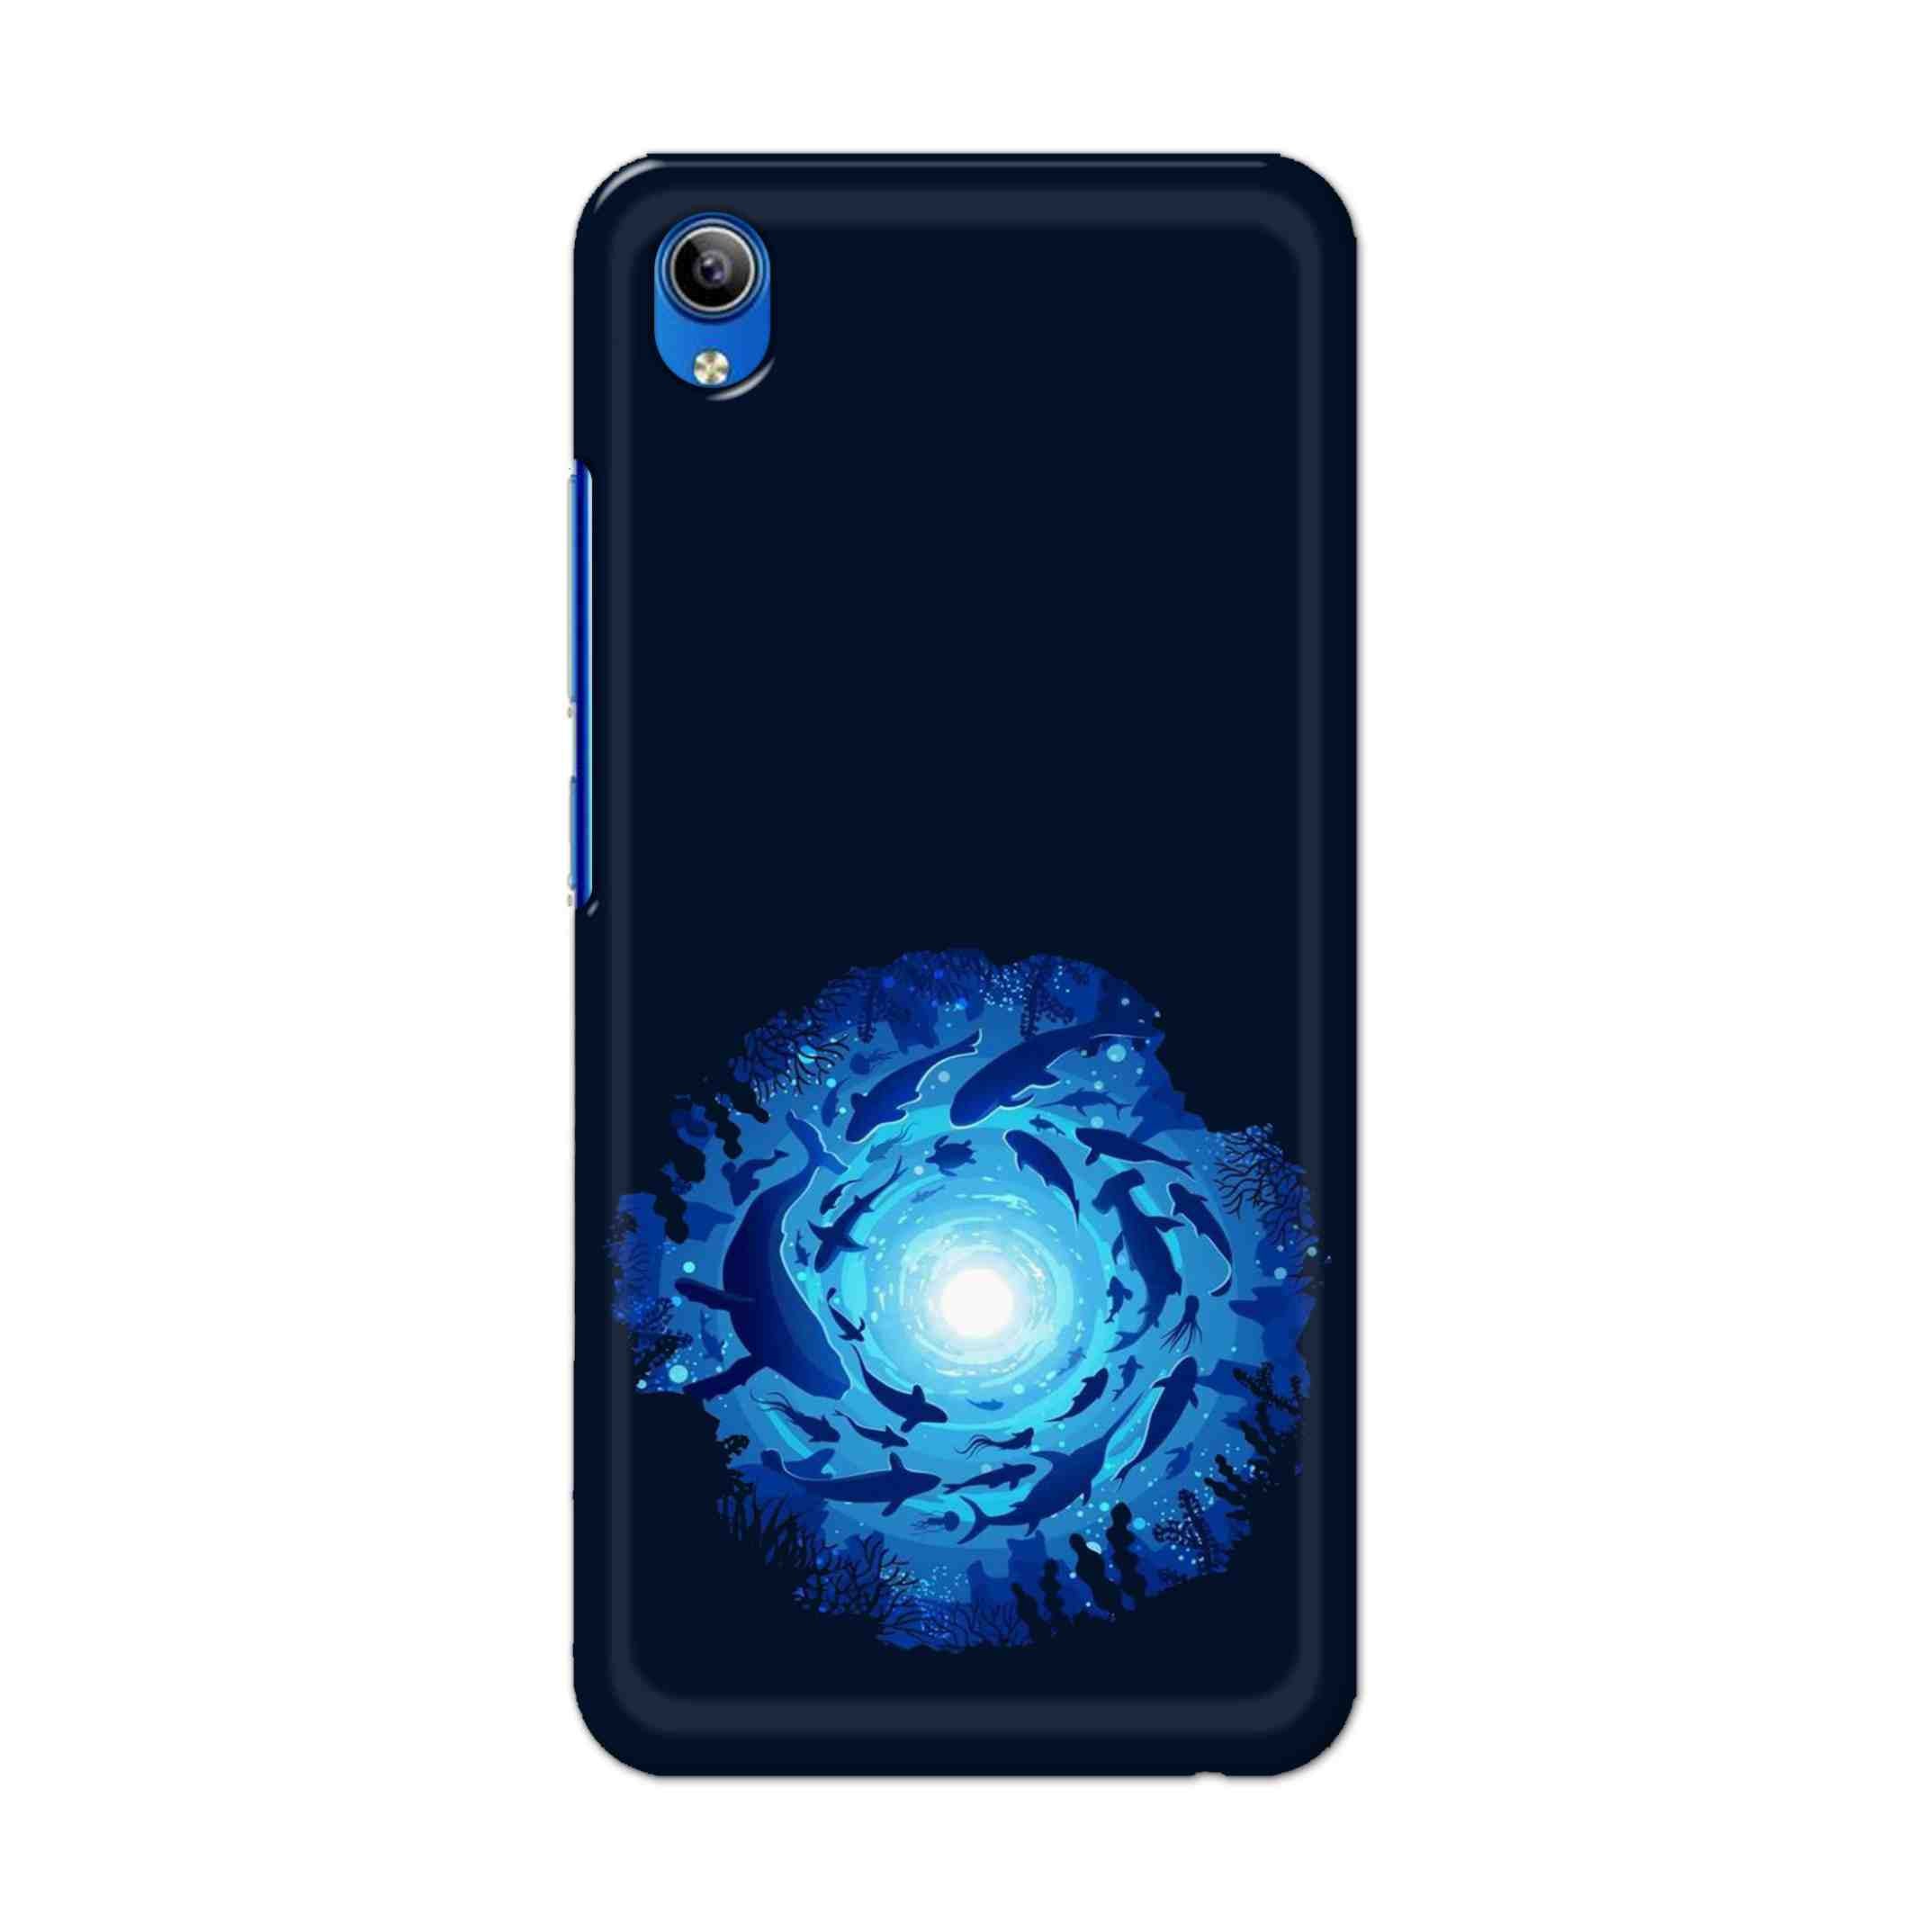 Buy Blue Whale Hard Back Mobile Phone Case Cover For Vivo Y91i Online